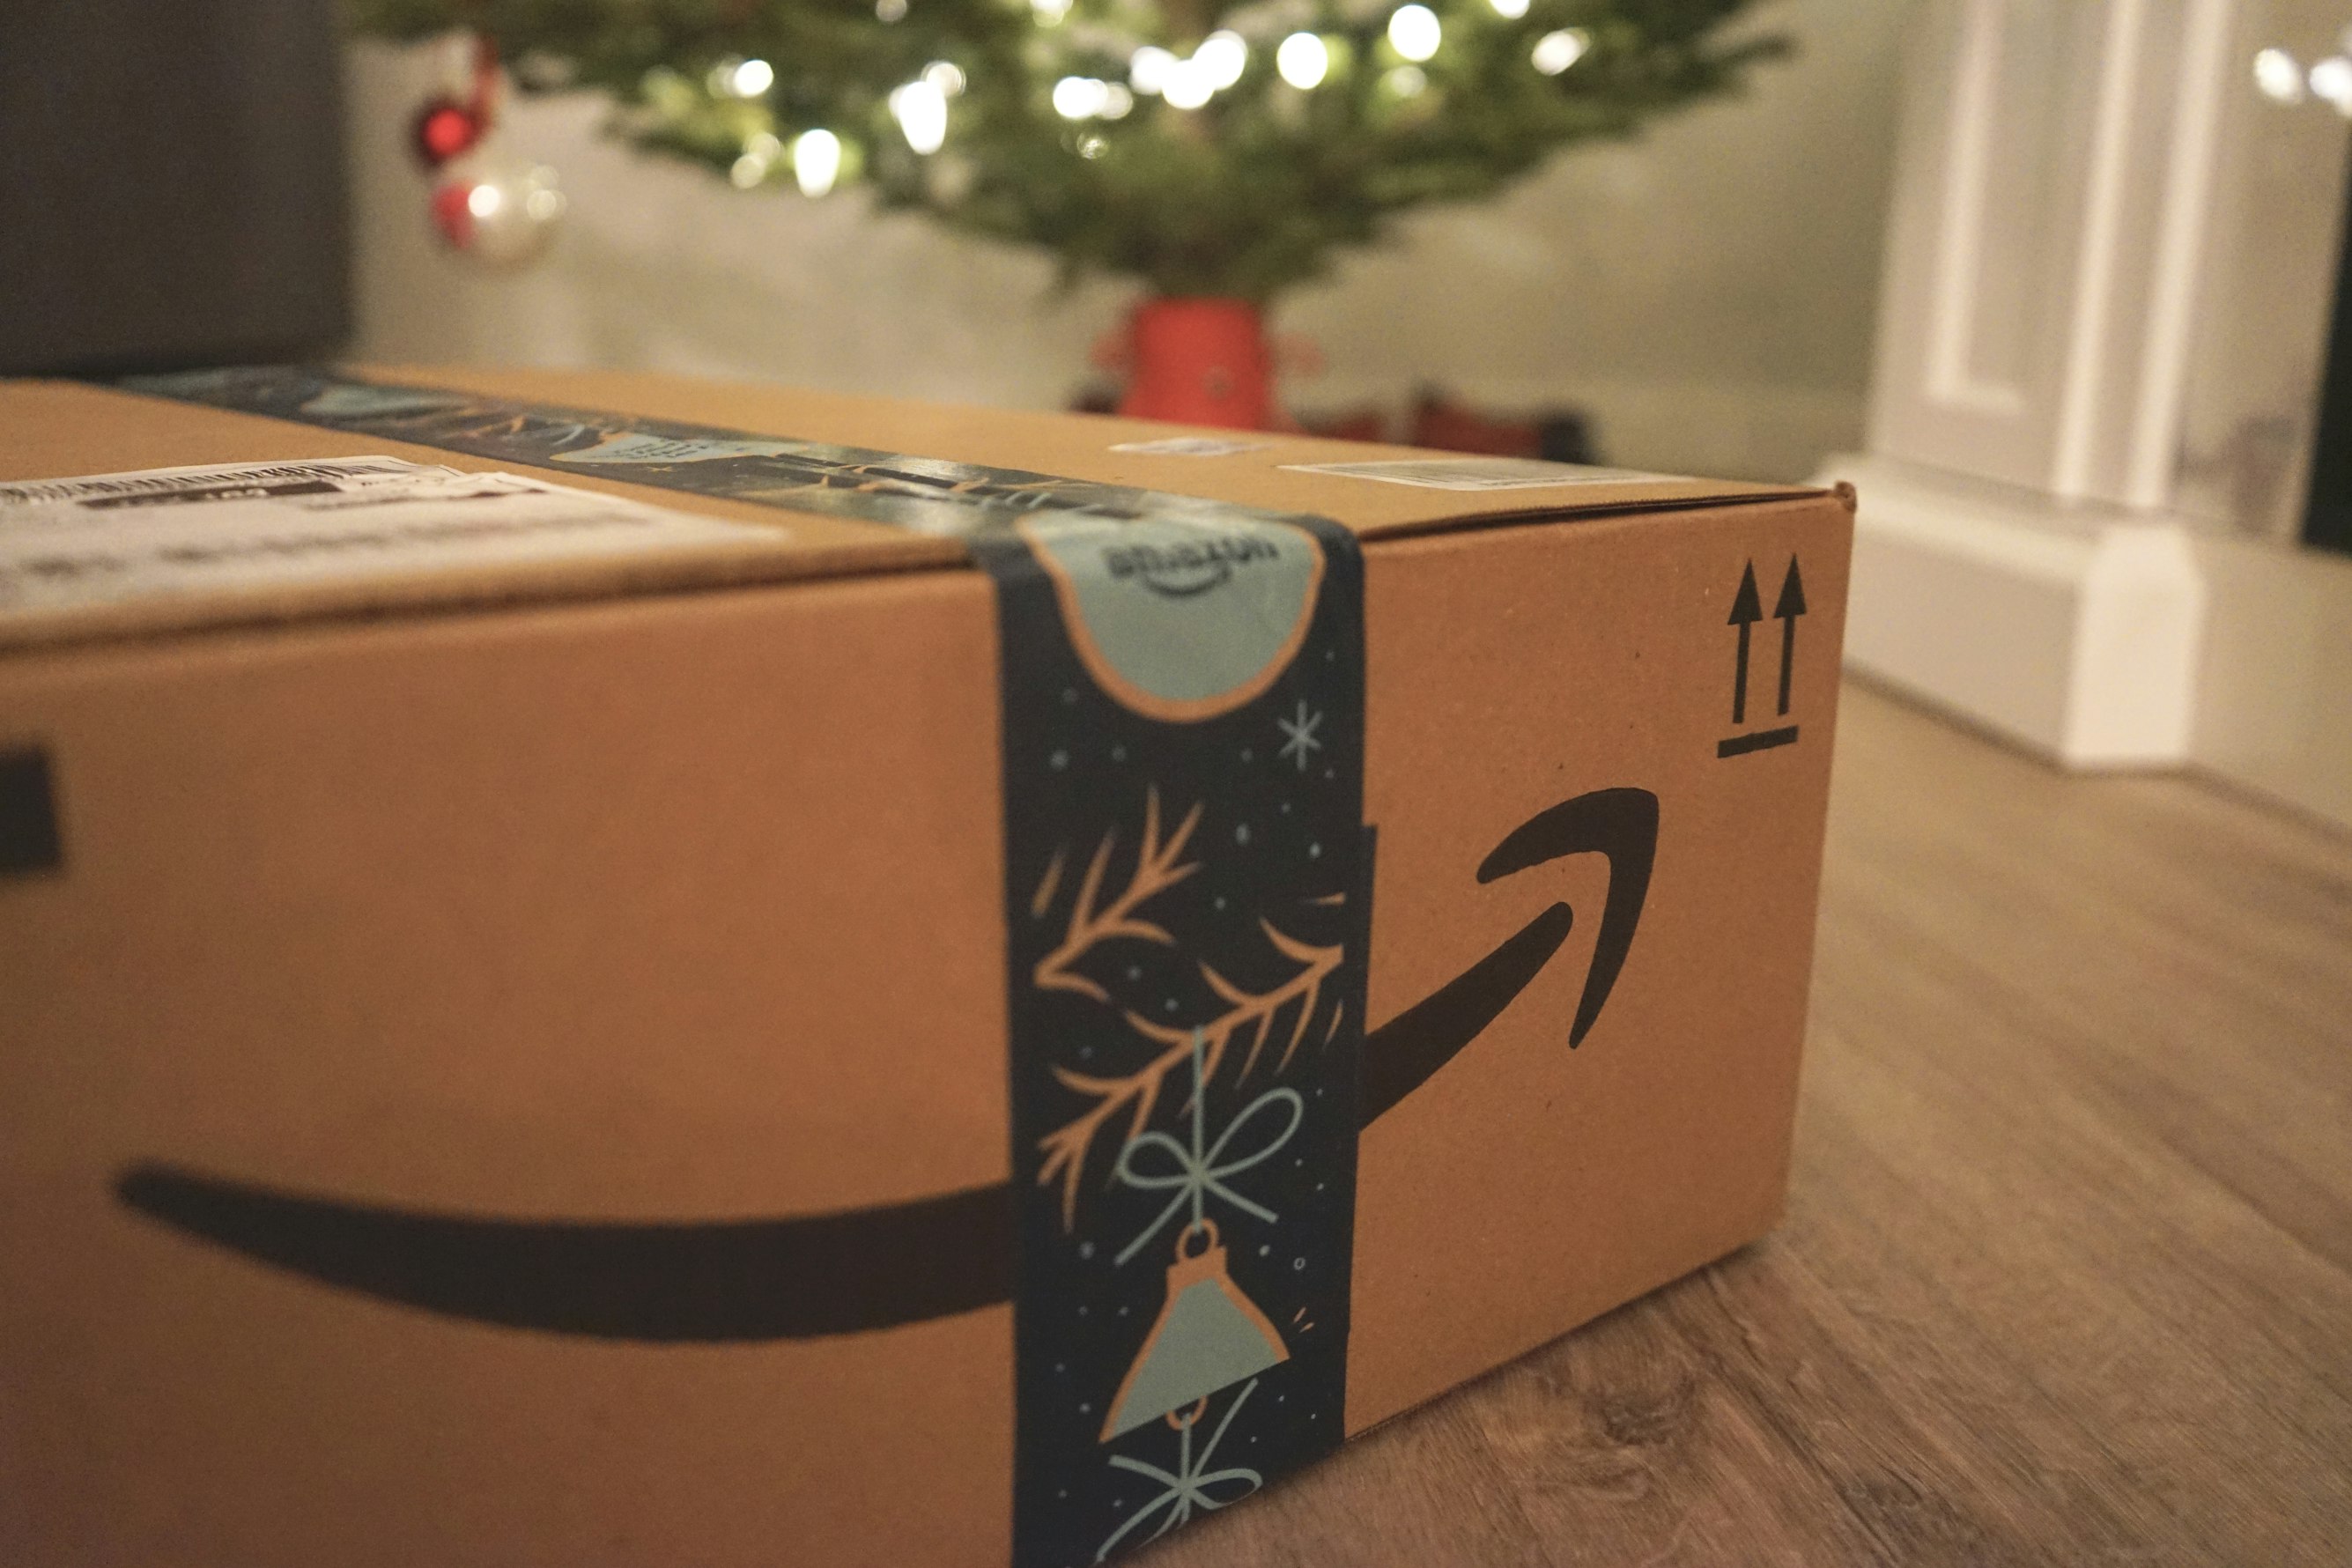 Does Amazon Deliver To Mexico? Amazon Mexico Shopping Guide